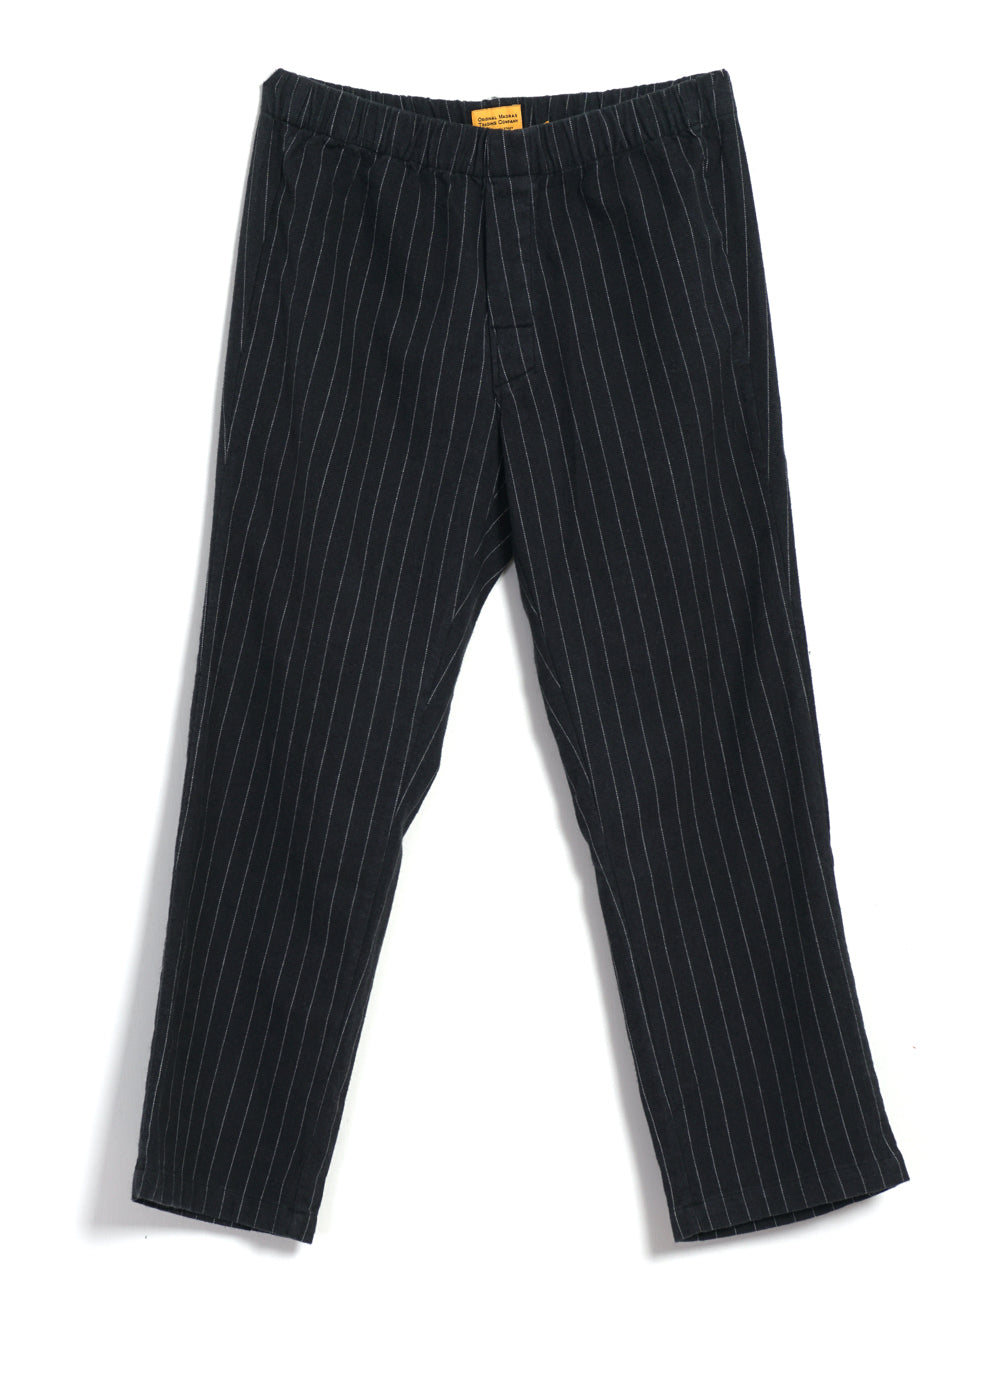 PAJAMA SUIT | Two Ply Oxford Weave | Black Pinstripe